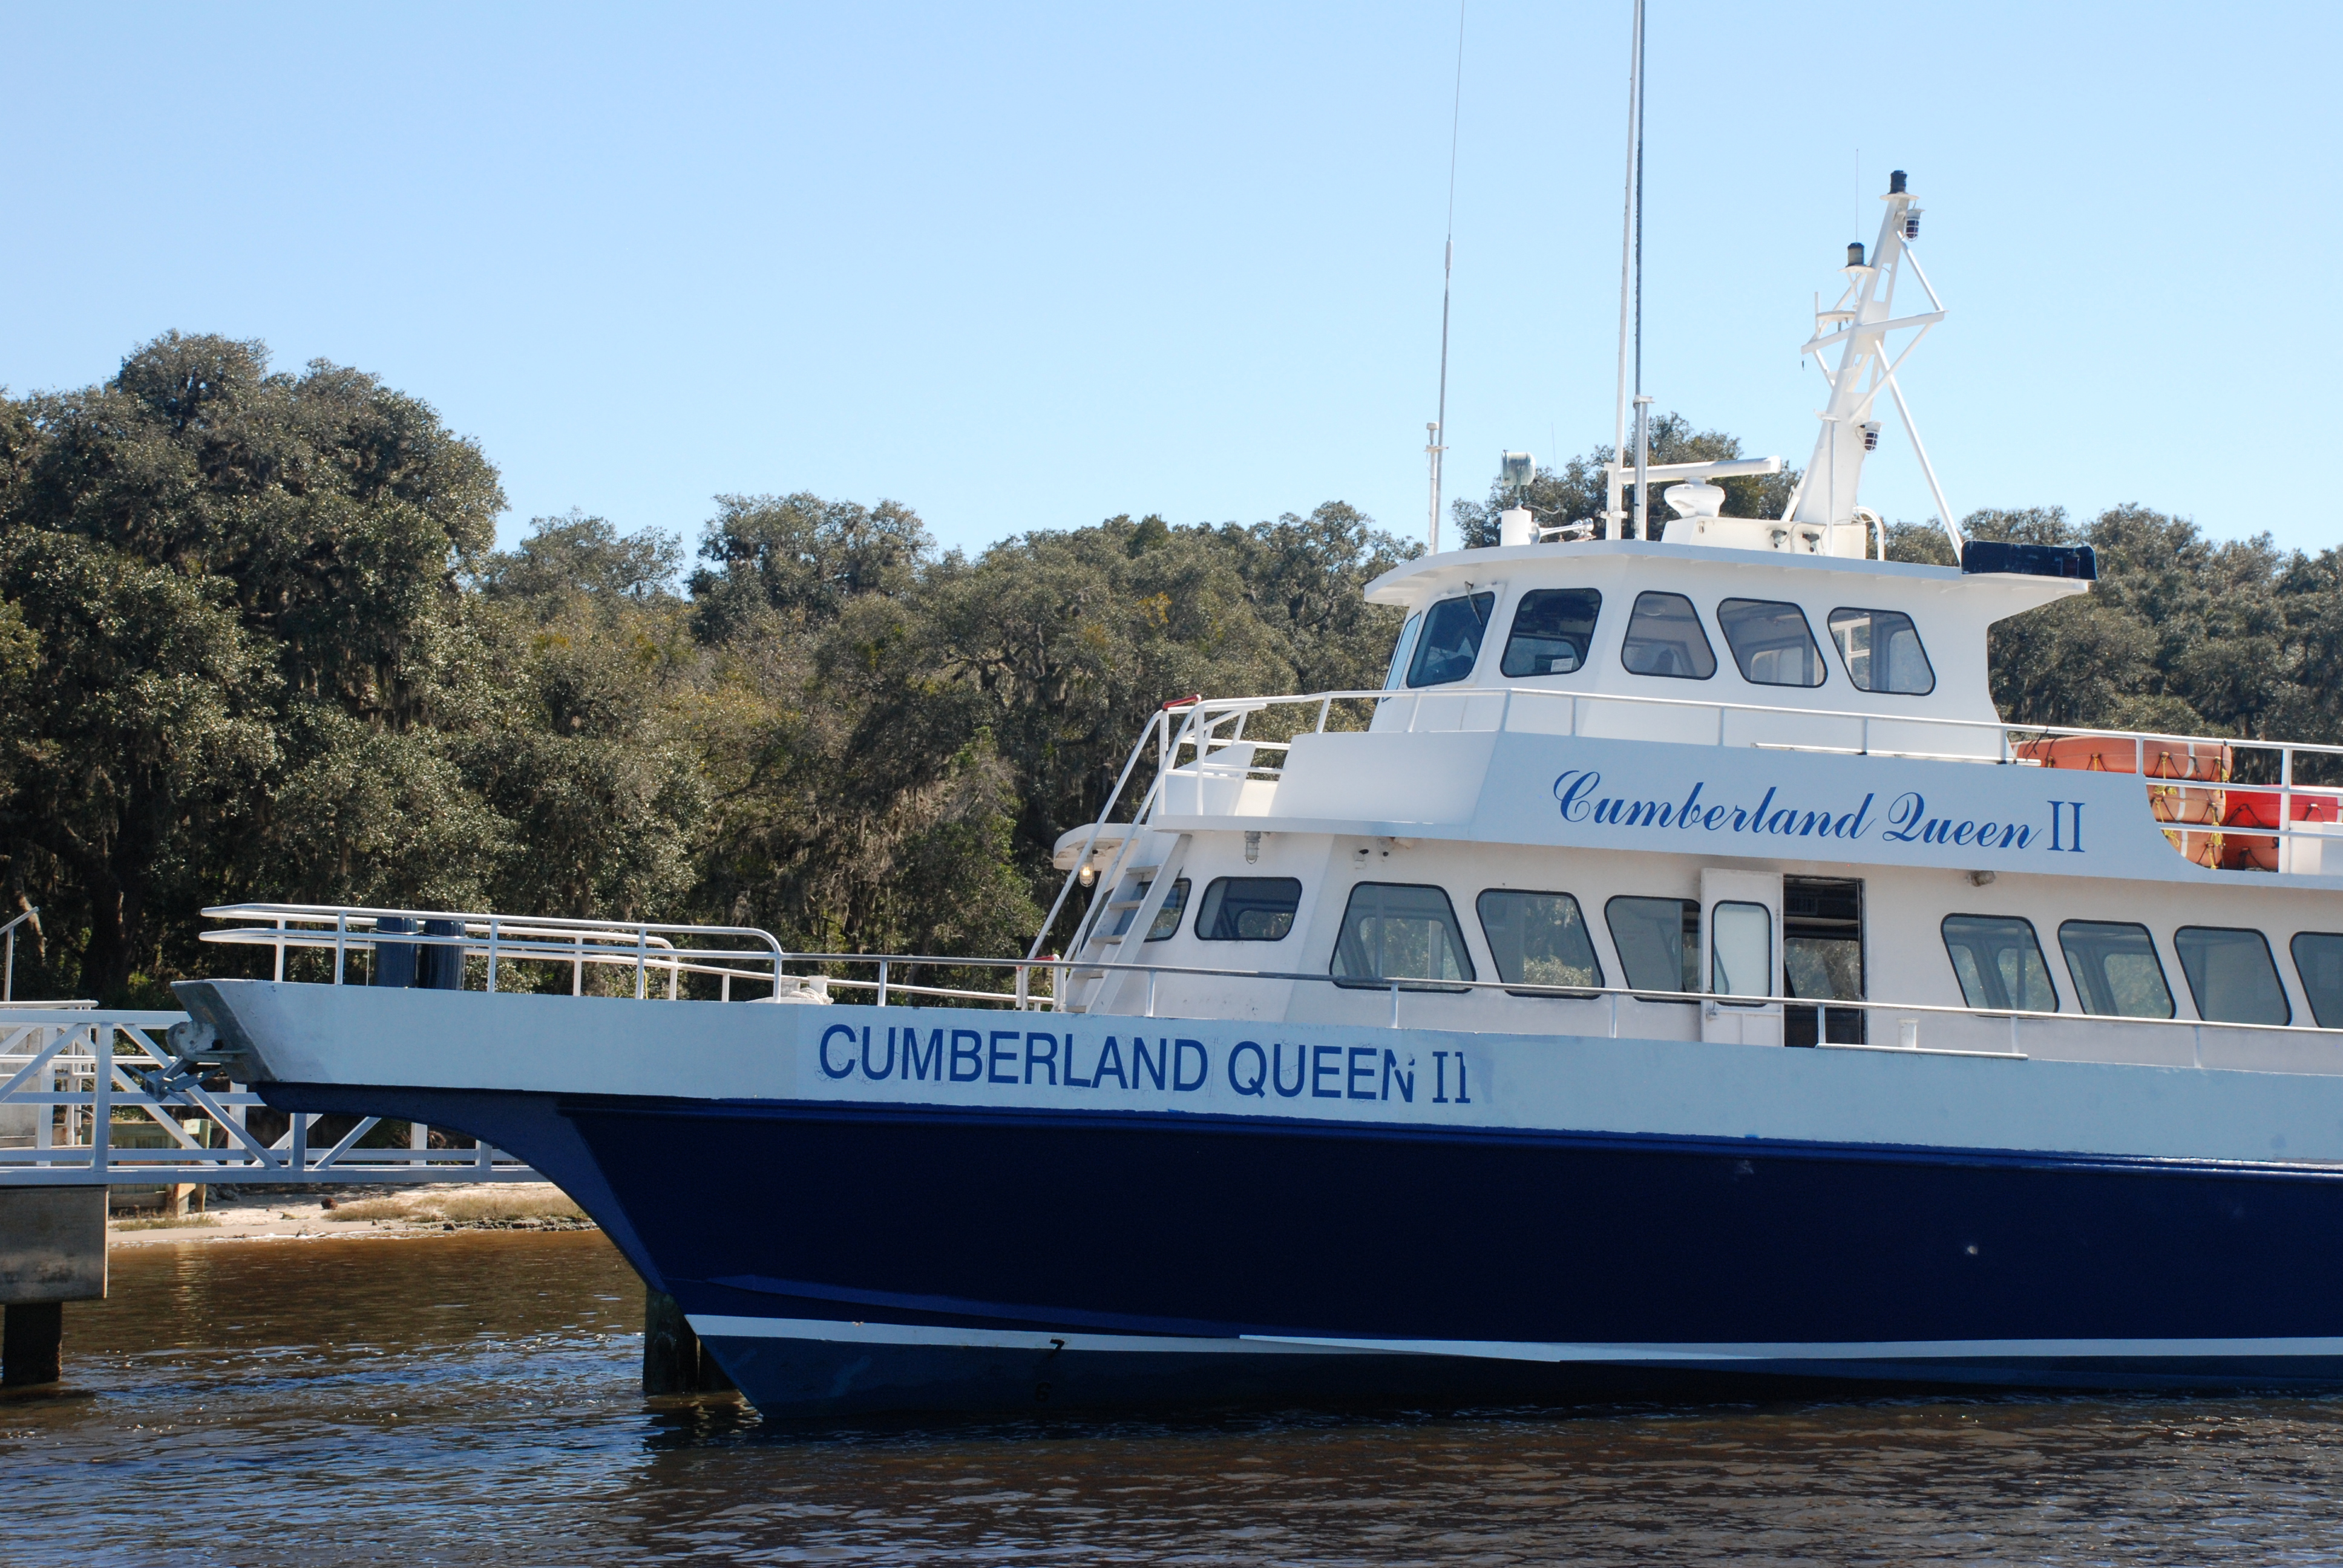 Cumberland Island Vacation Guide - A Friend Afar